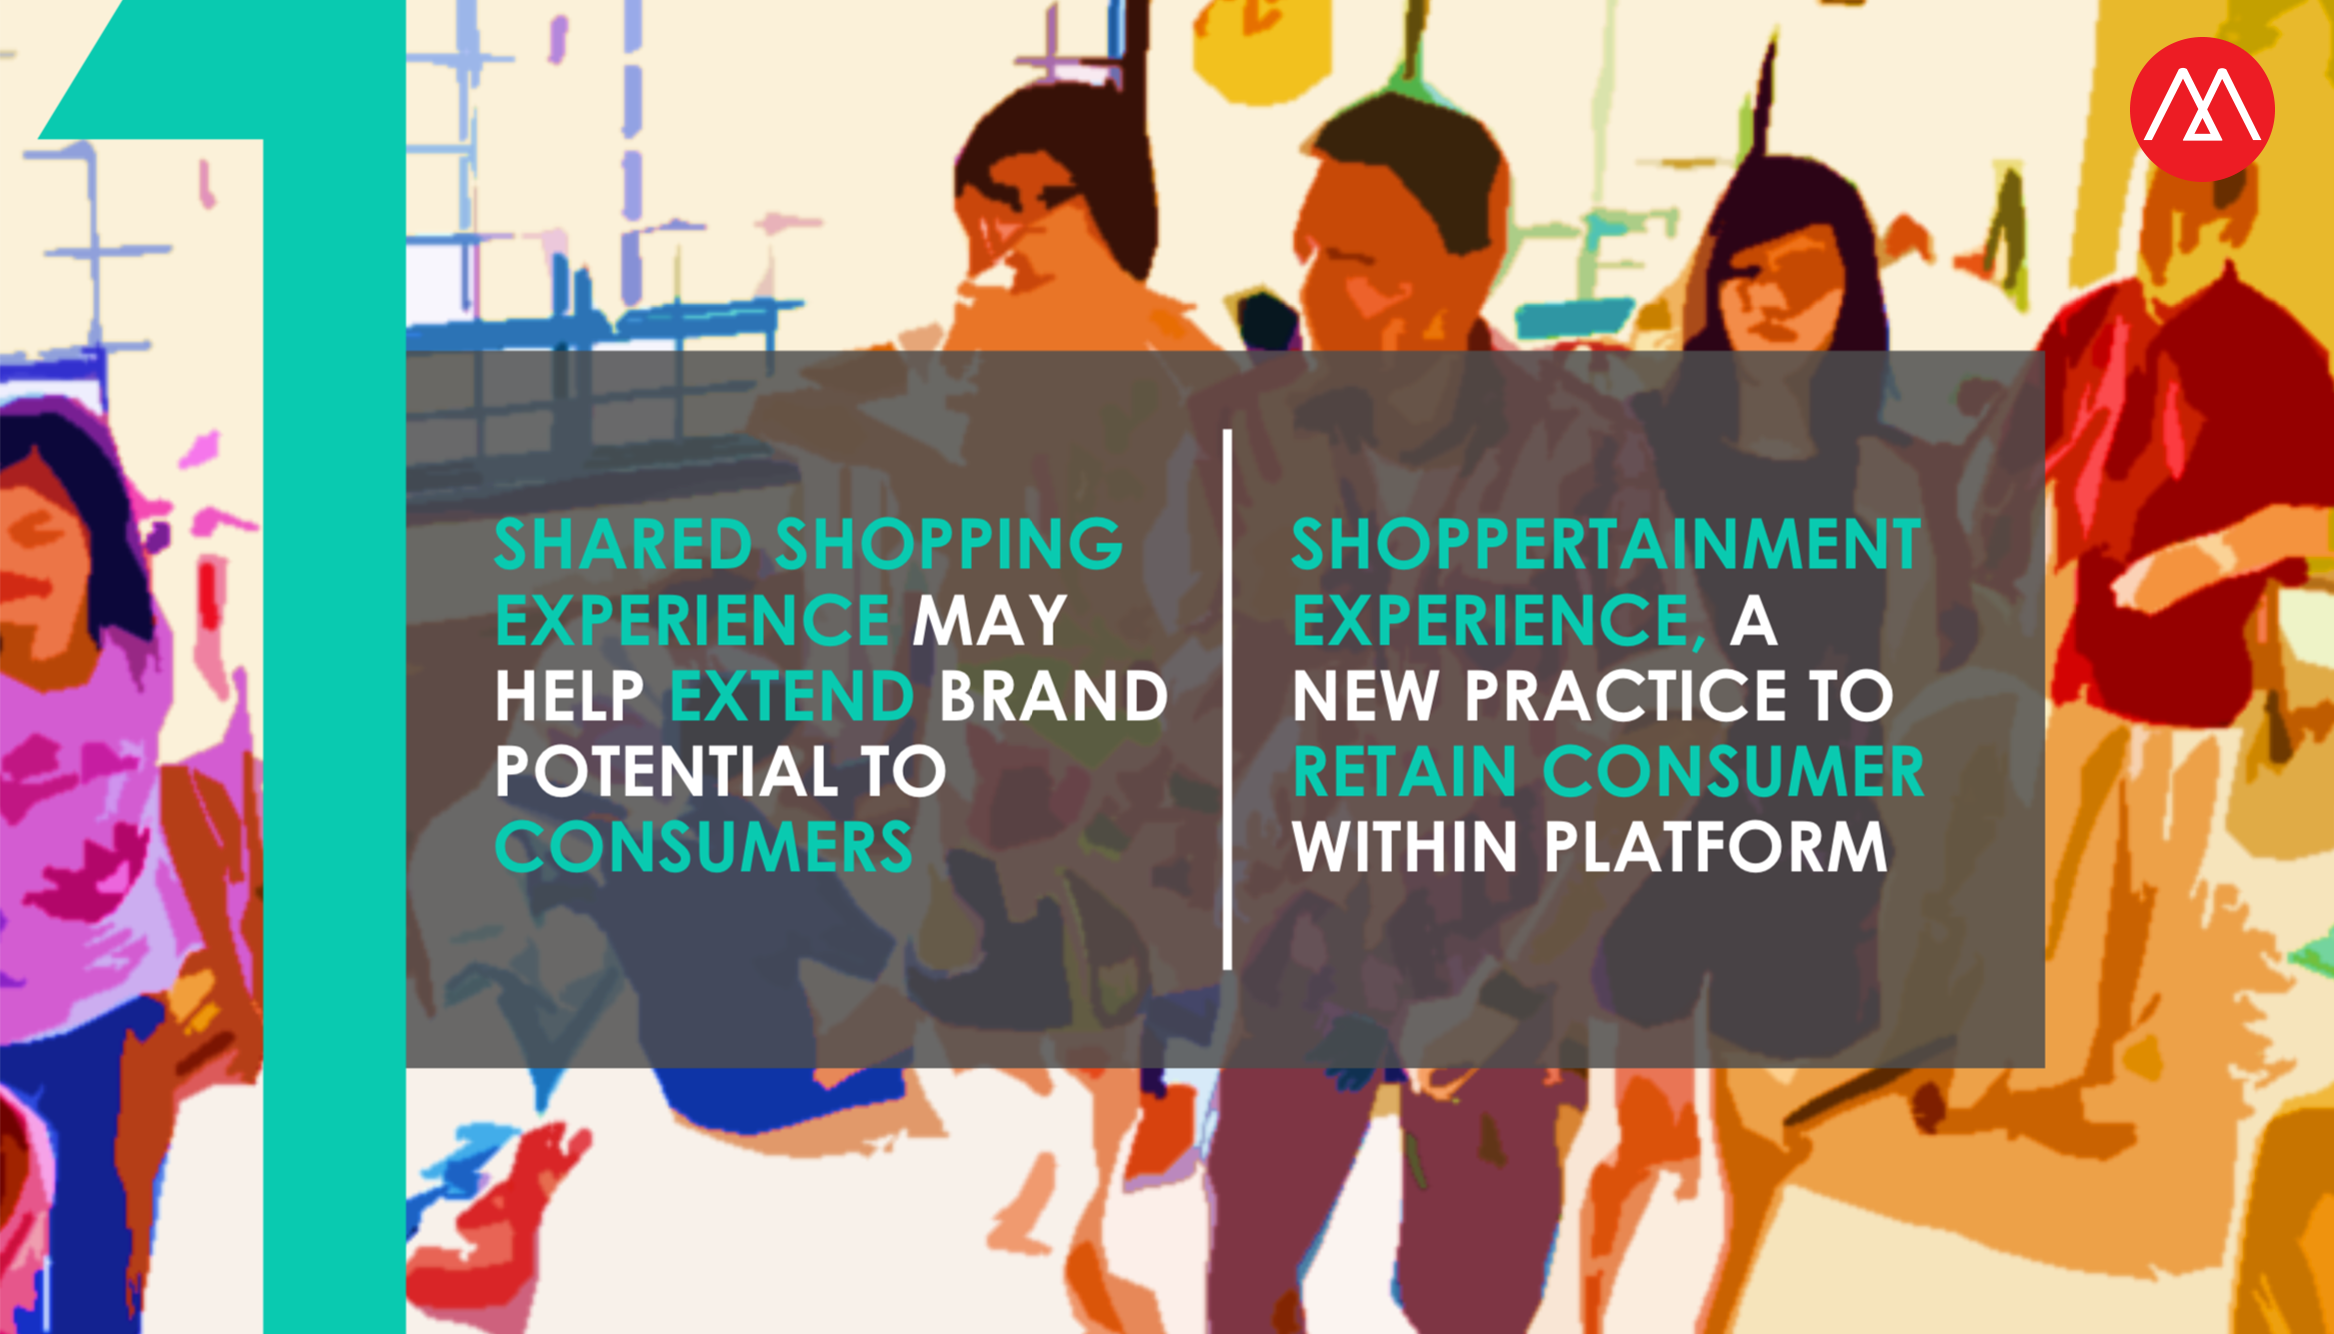 Shopping Experience คือ สิ่งสำคัญ และ Shoppertainment จะเป็นกลยุทธ์ที่ทำให้แบรนด์สามารถรักษาฐานลูกค้าได้